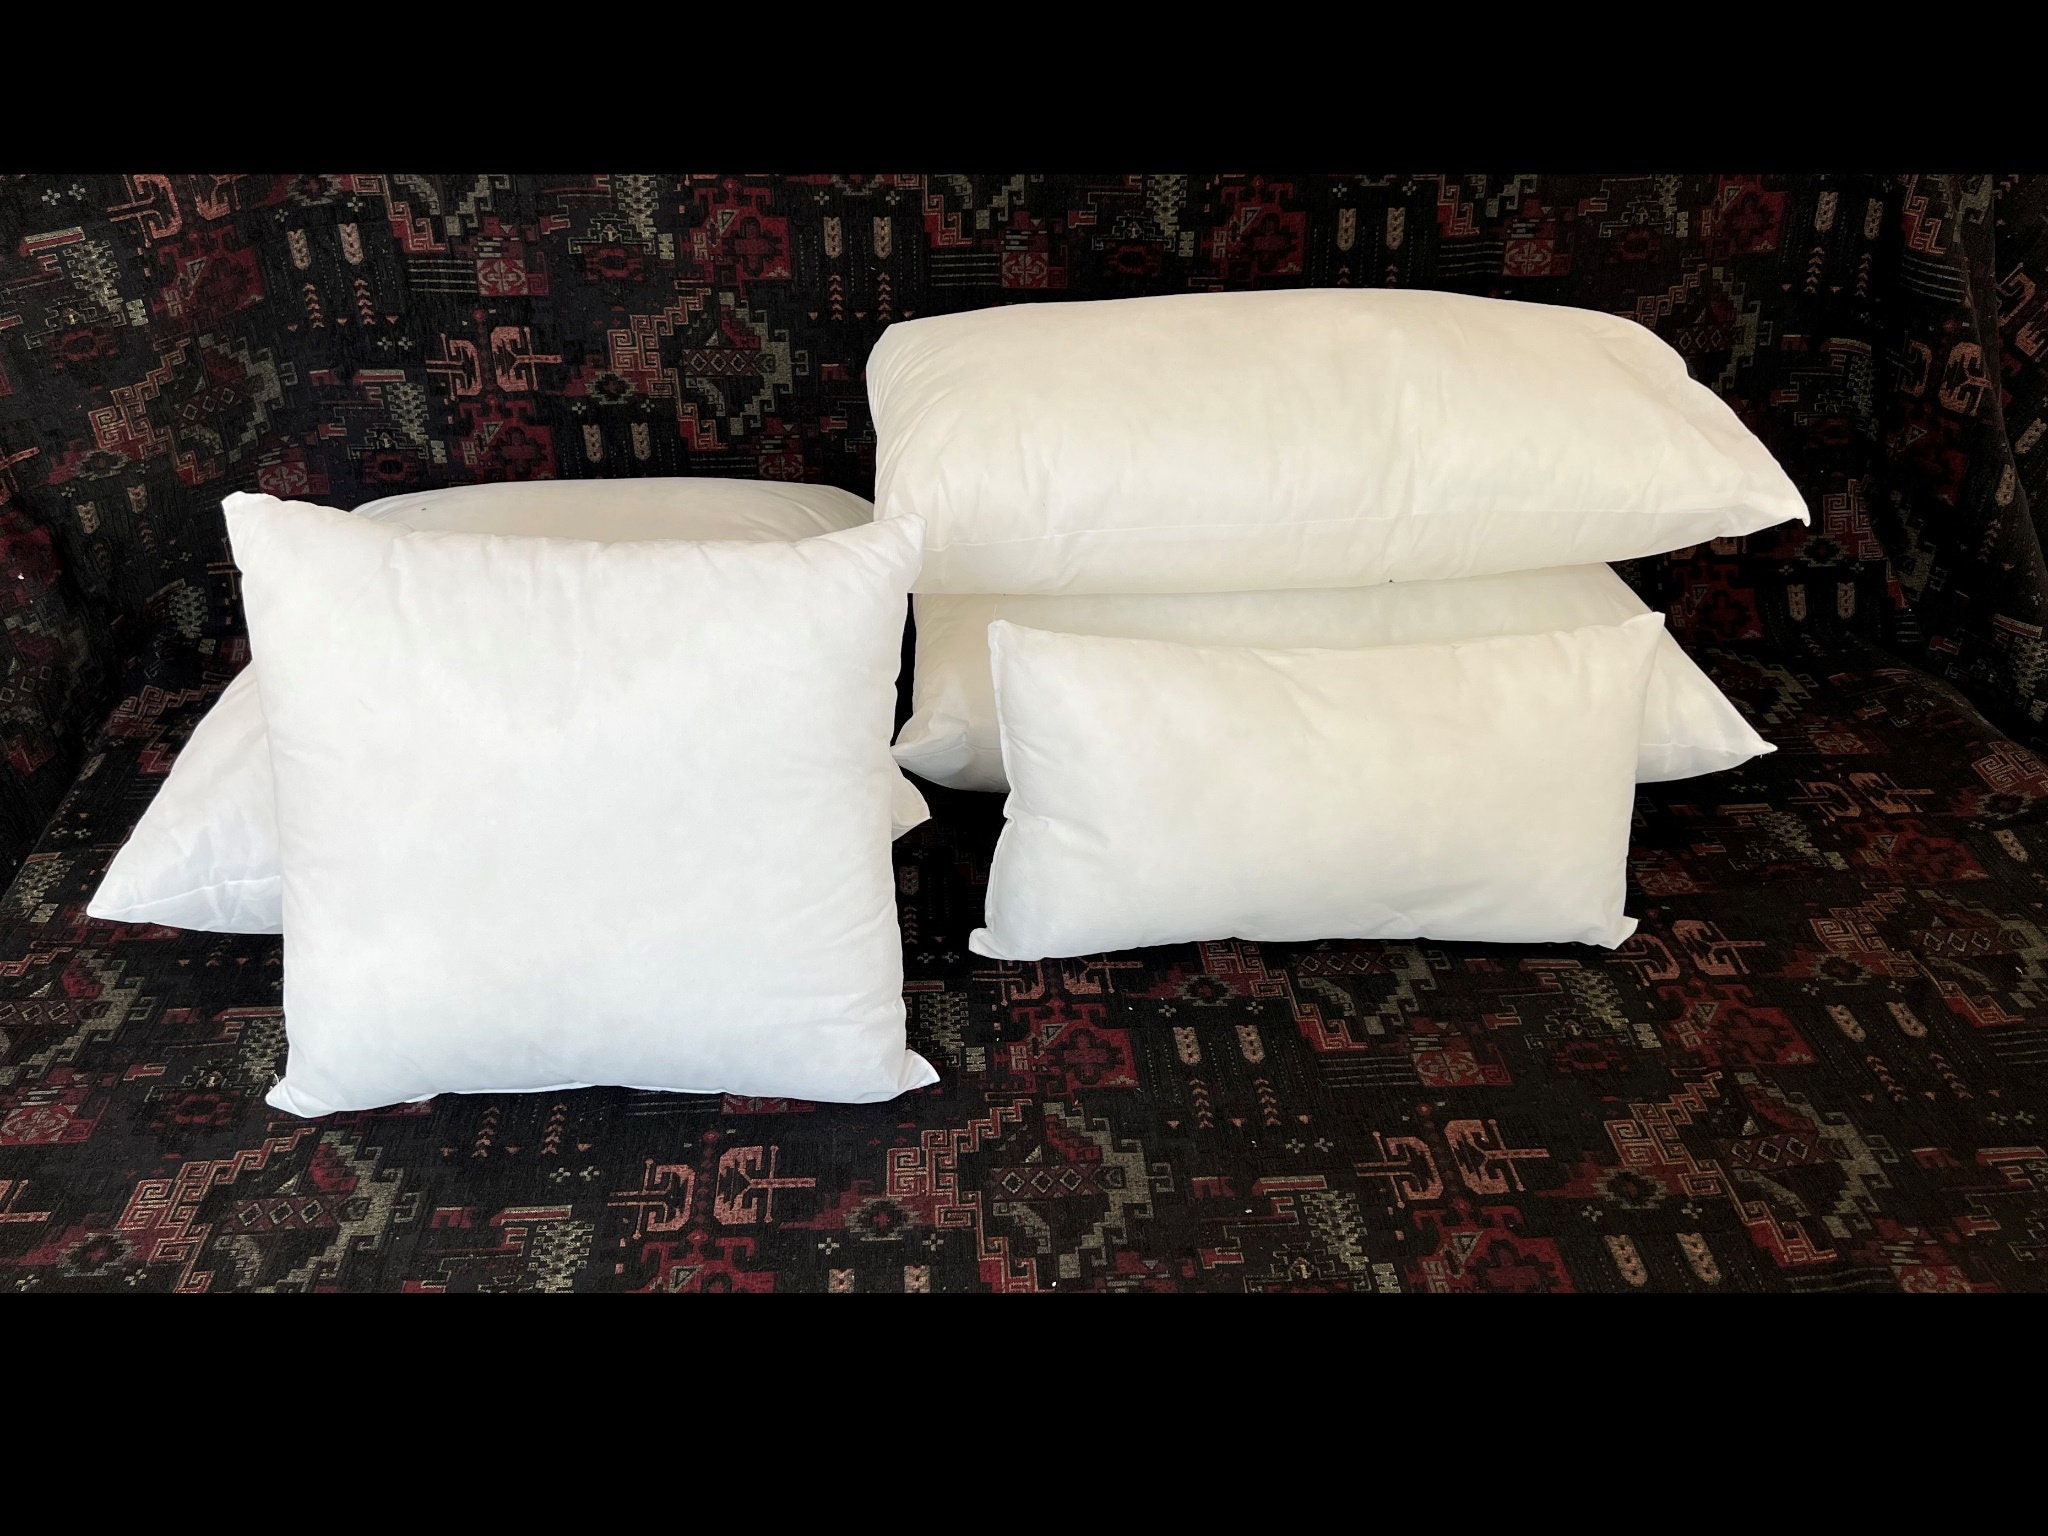 33x33 Synthetic Down Alternate Indoor Outdoor Hypoallergenic Pillow Insert  Premium Insert Luxury Insert Square Pillow Pillow Form 